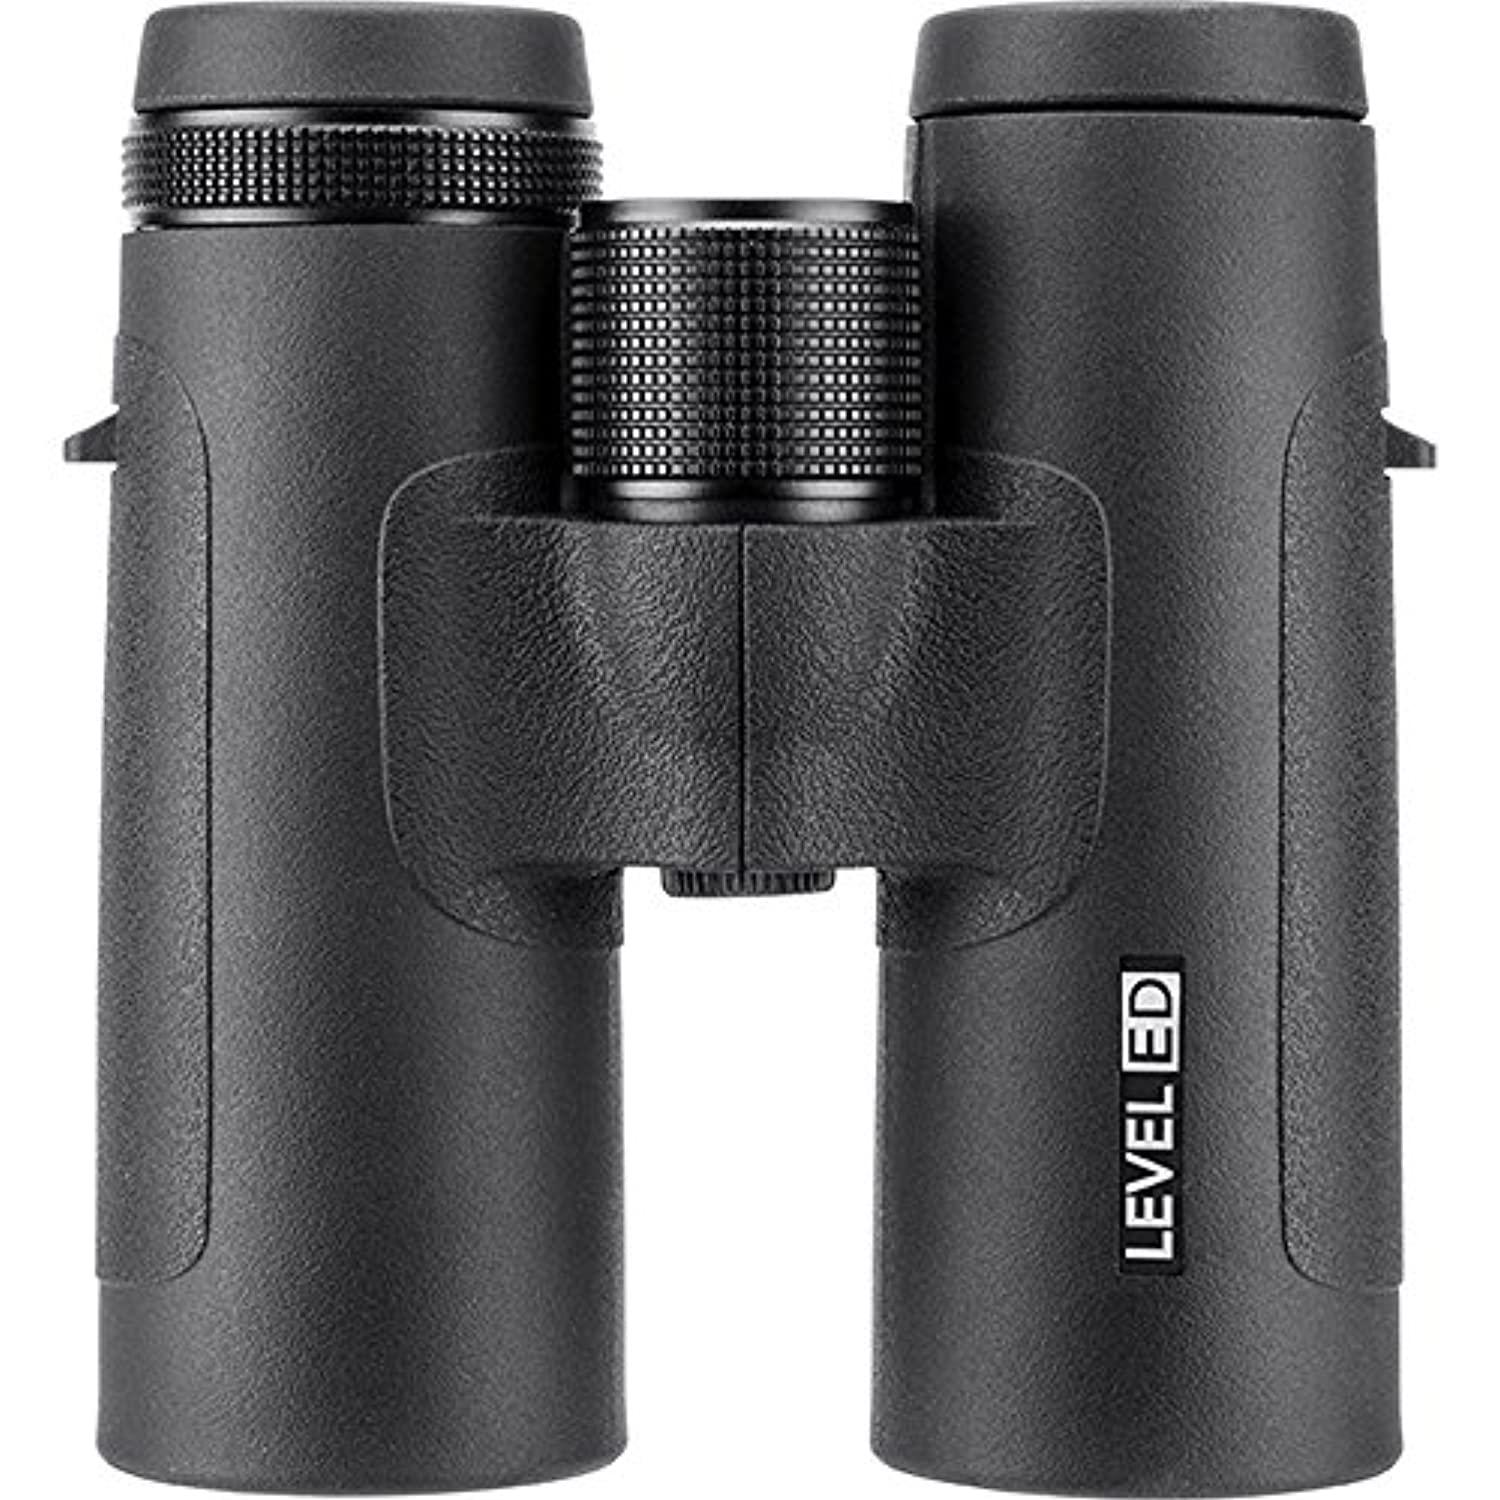 barska ab12992 level ed waterproof binoculars 10x42, multi, one size